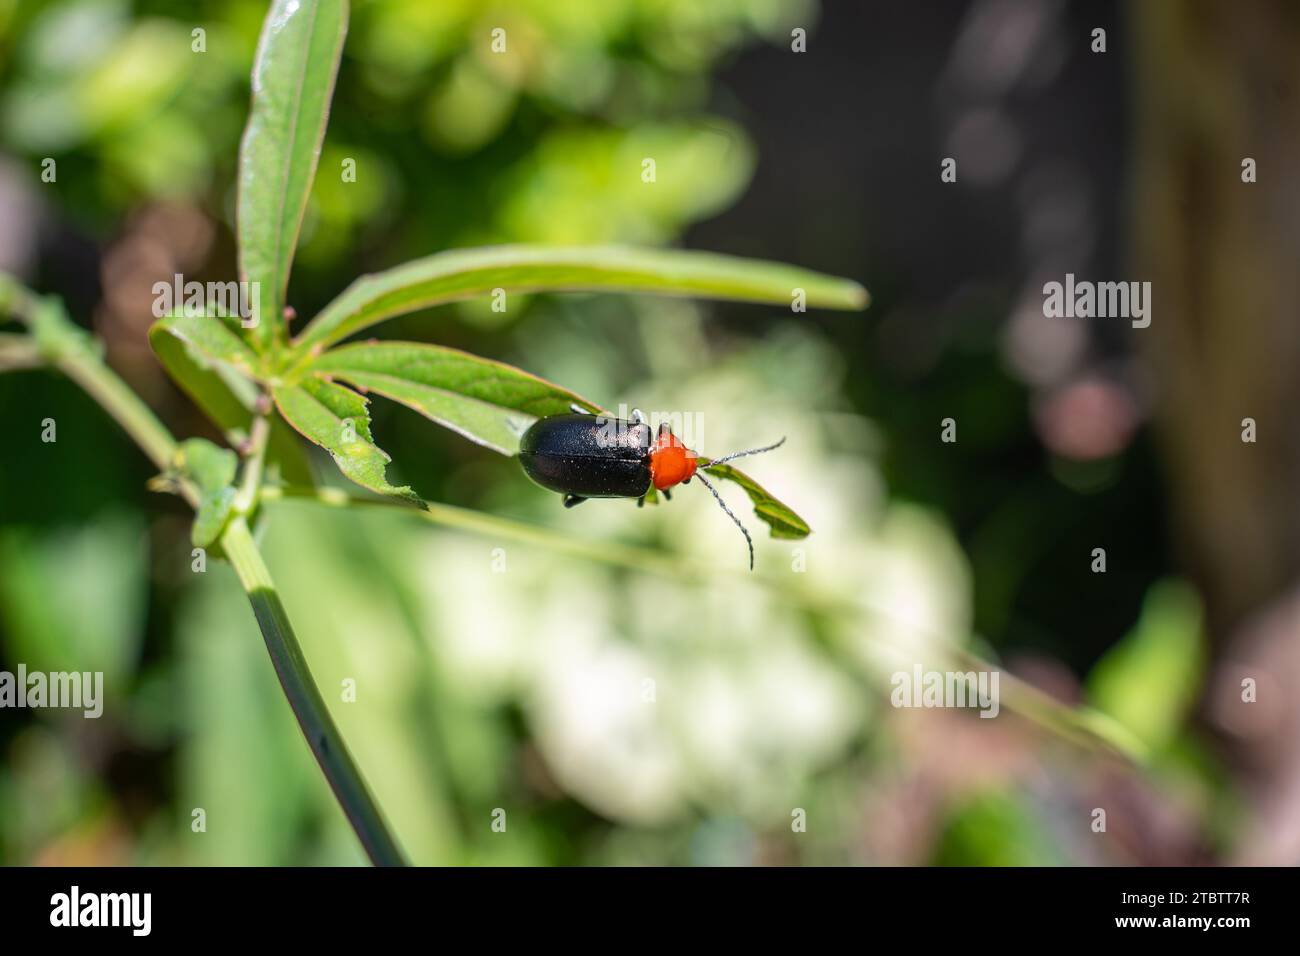 beetles, lady beetle on a green leaf Stock Photo